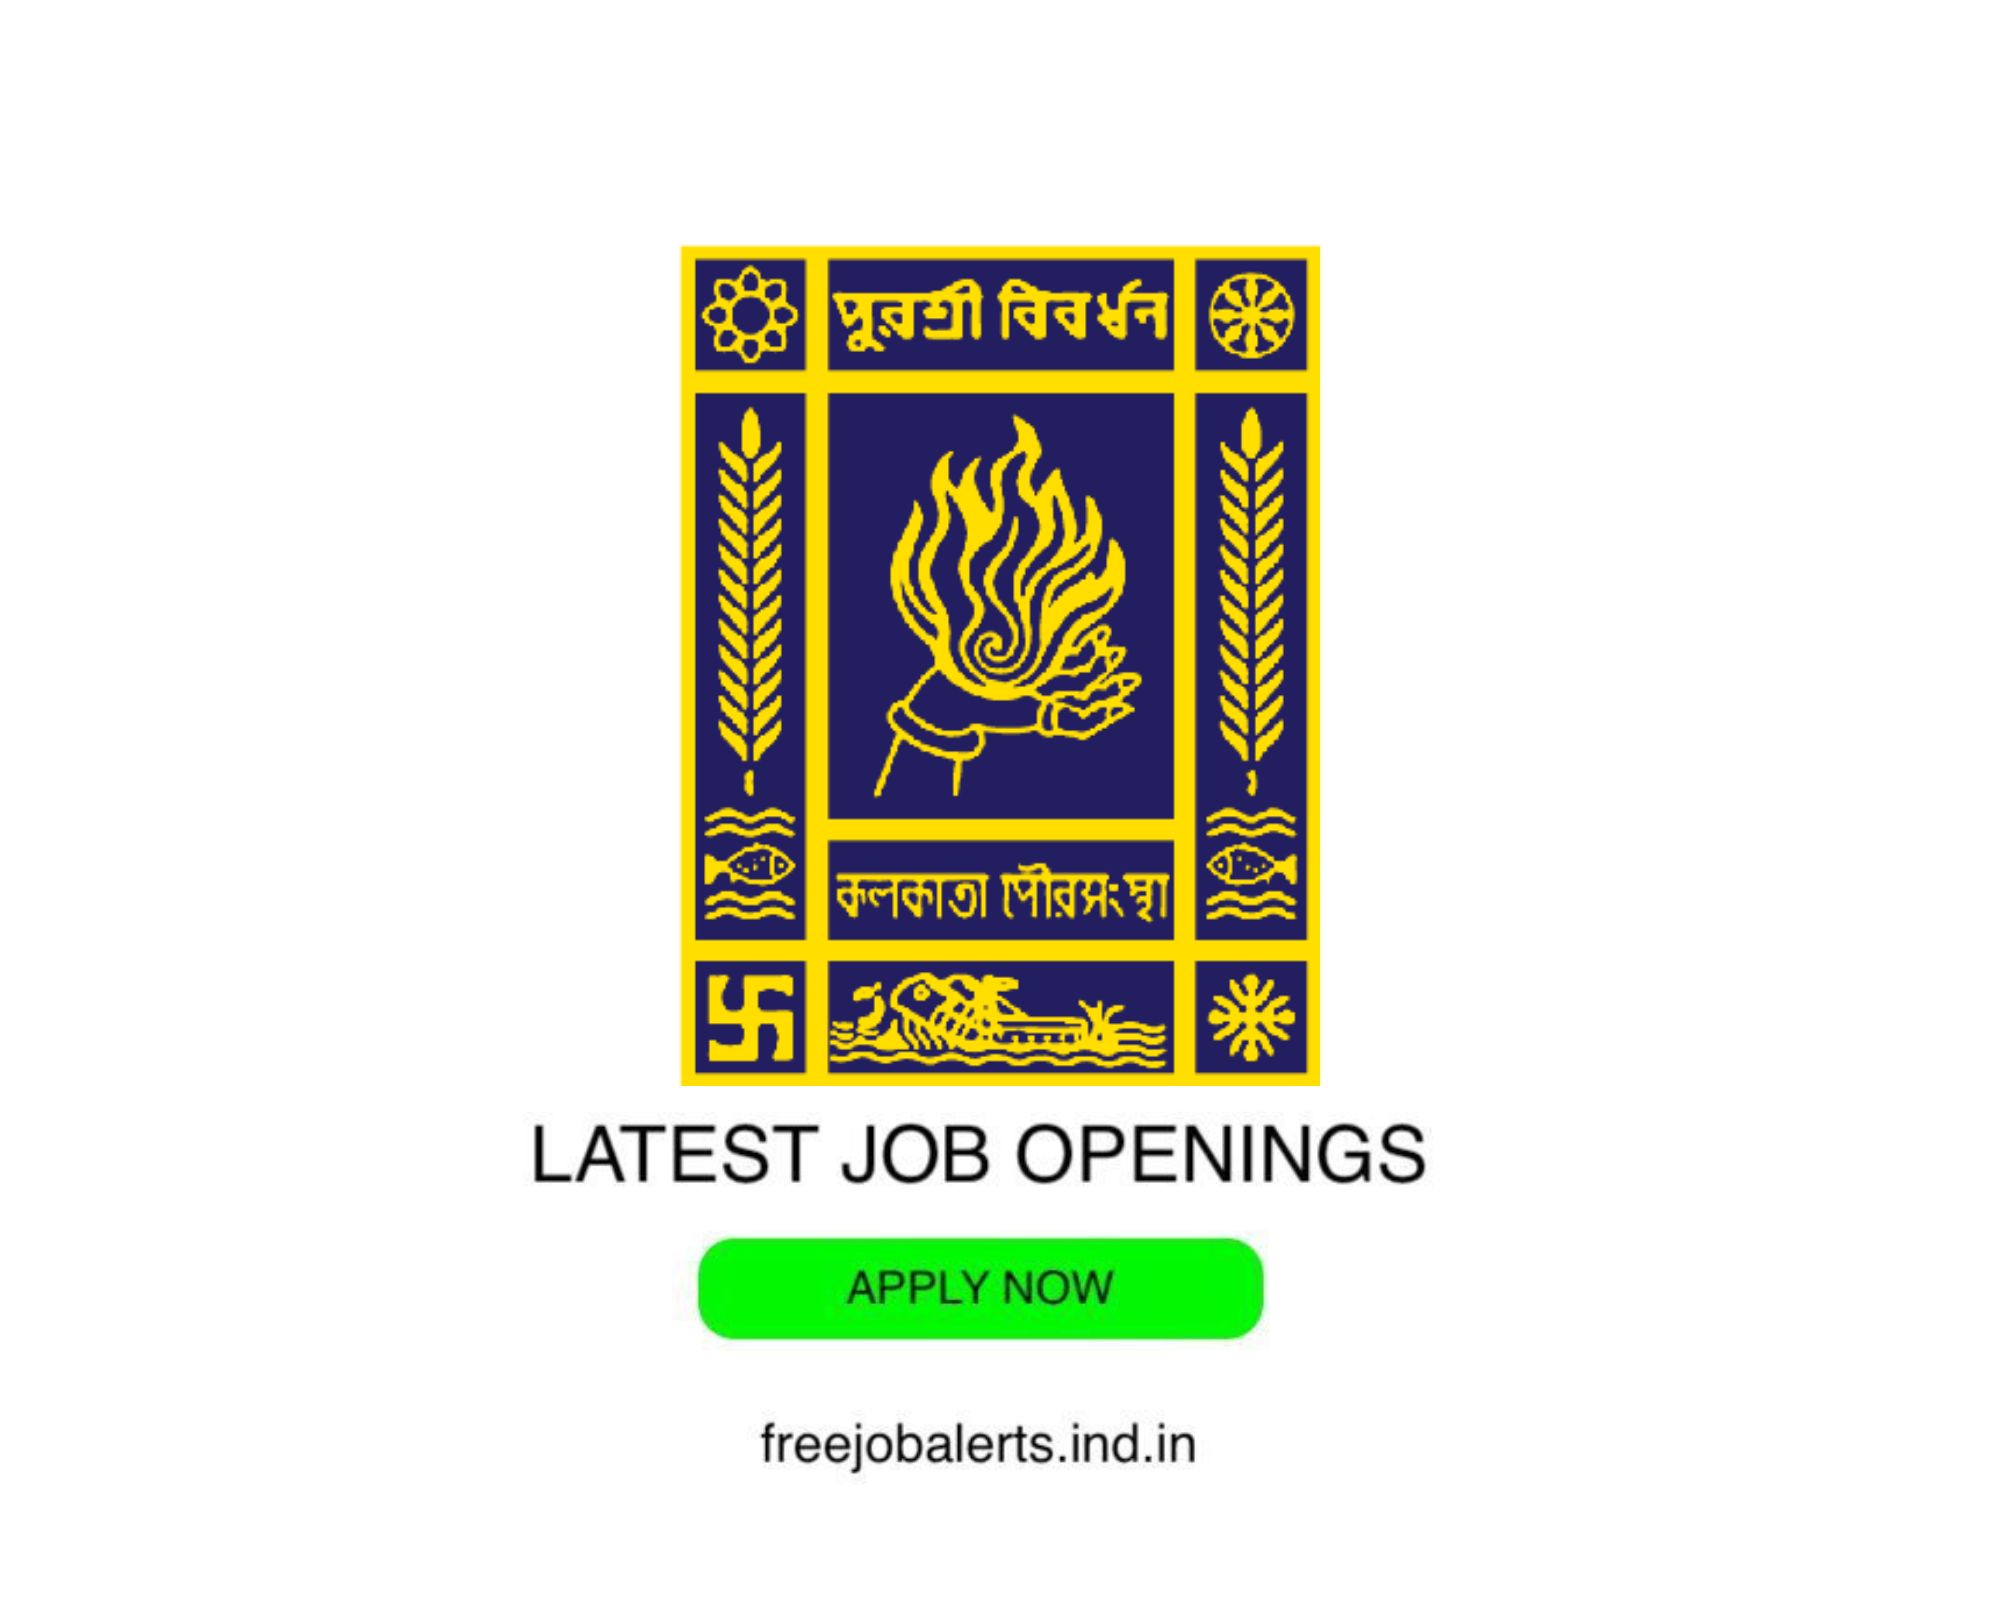 KMC - Kolkata Municipal Corporation - Latest Govt job openings - Free job alerts, Indian Govt Jobs